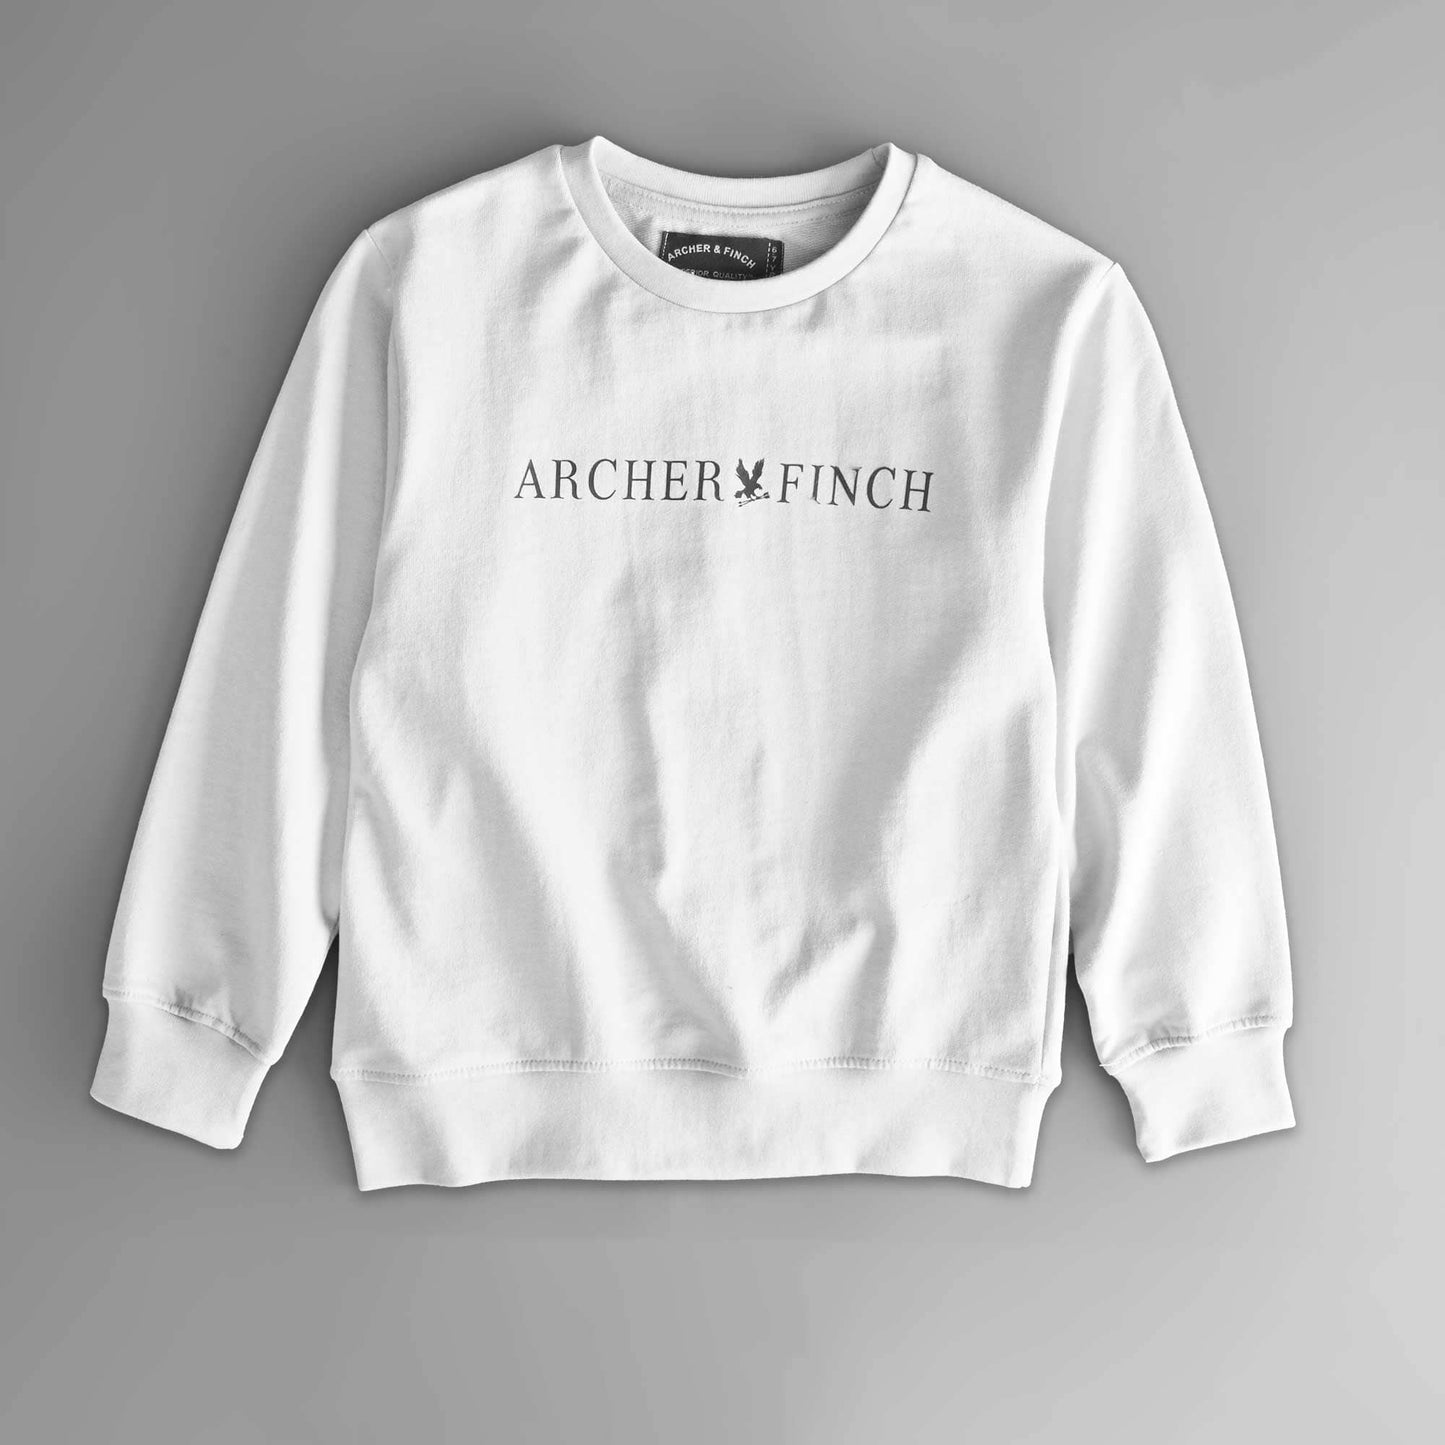 Archer & Finch Boy's Printed Terry Sweat Shirt Boy's Sweat Shirt LFS White 3-4 Years 